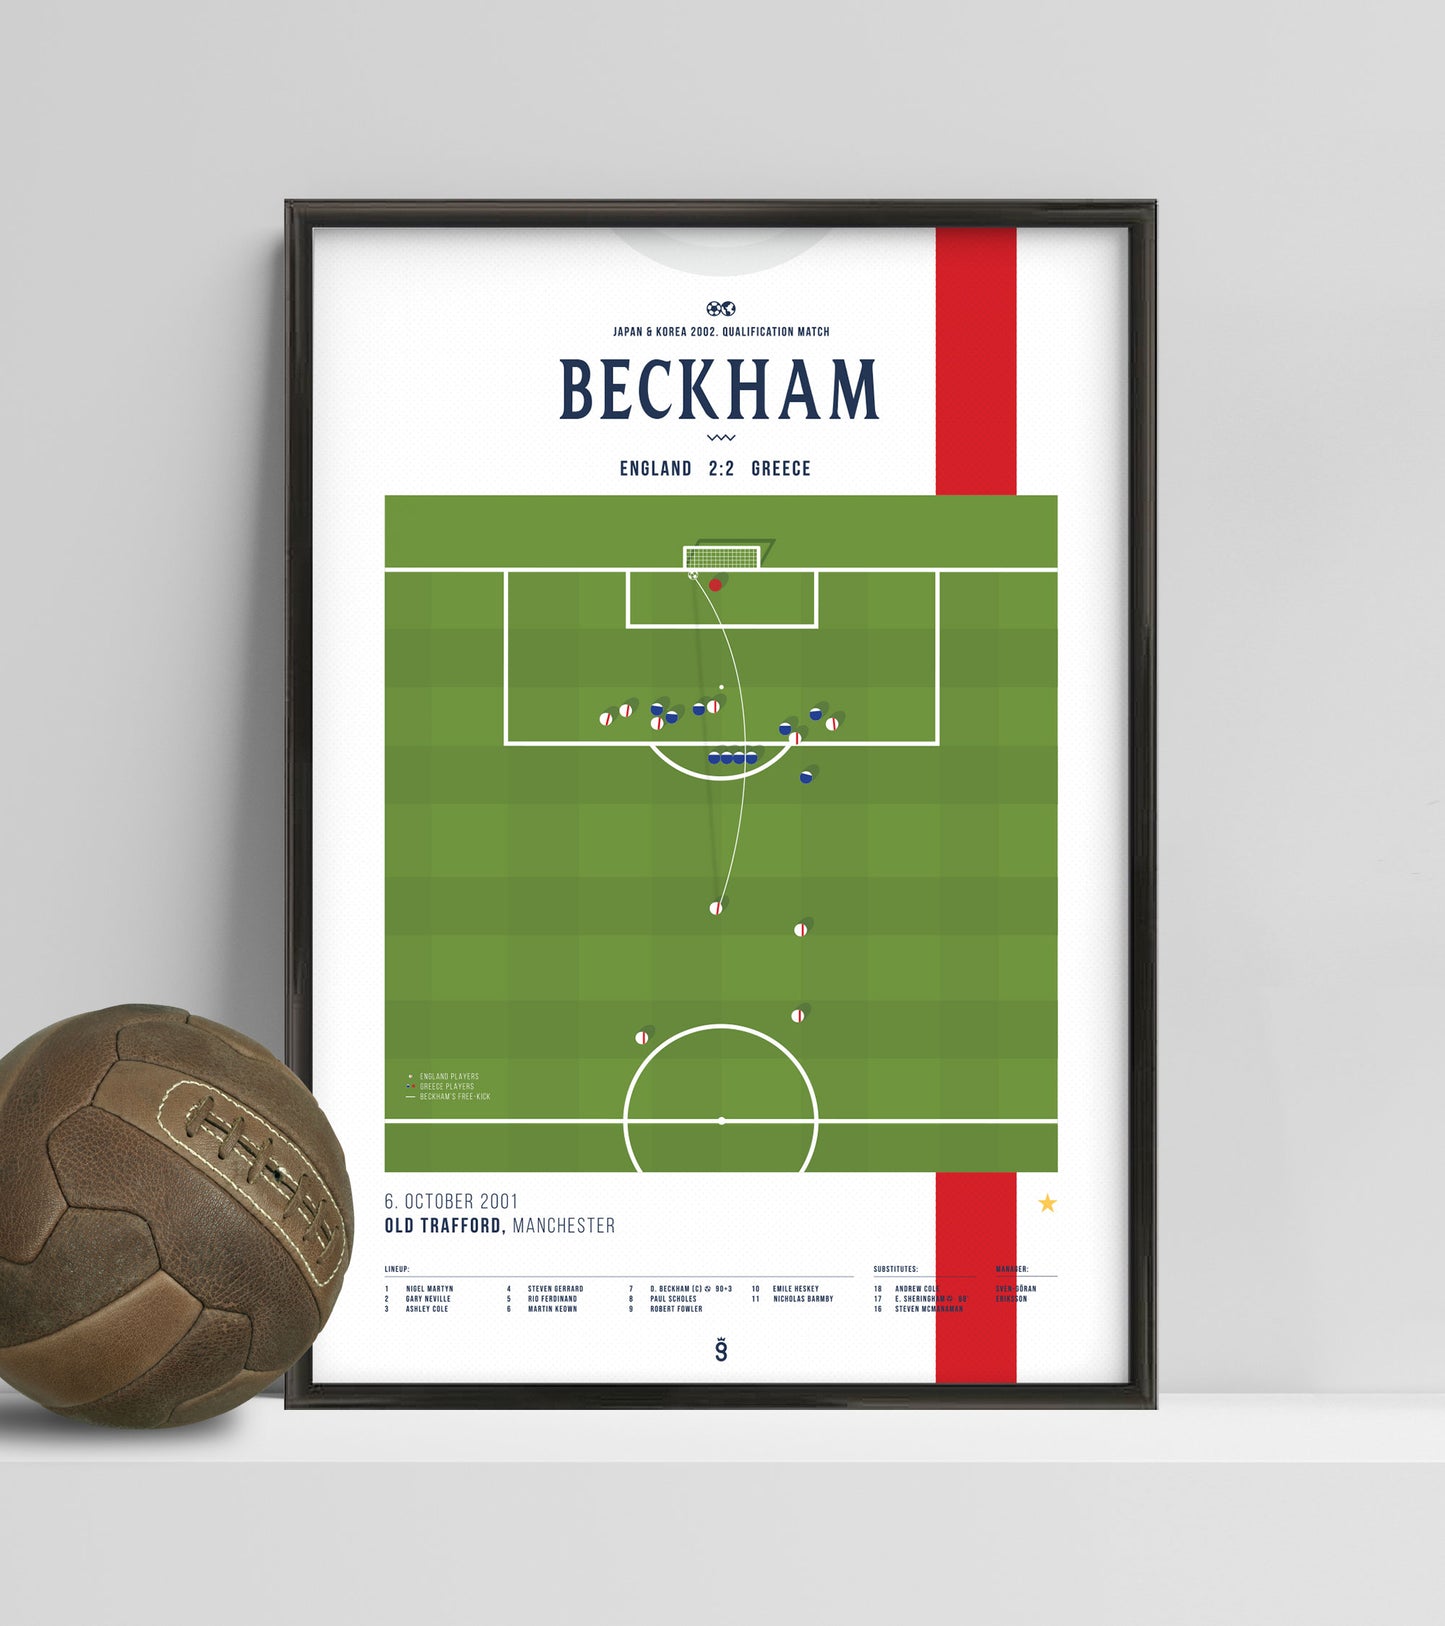 David Beckham's Iconic Free-Kick Against Greece – Goal of Fame